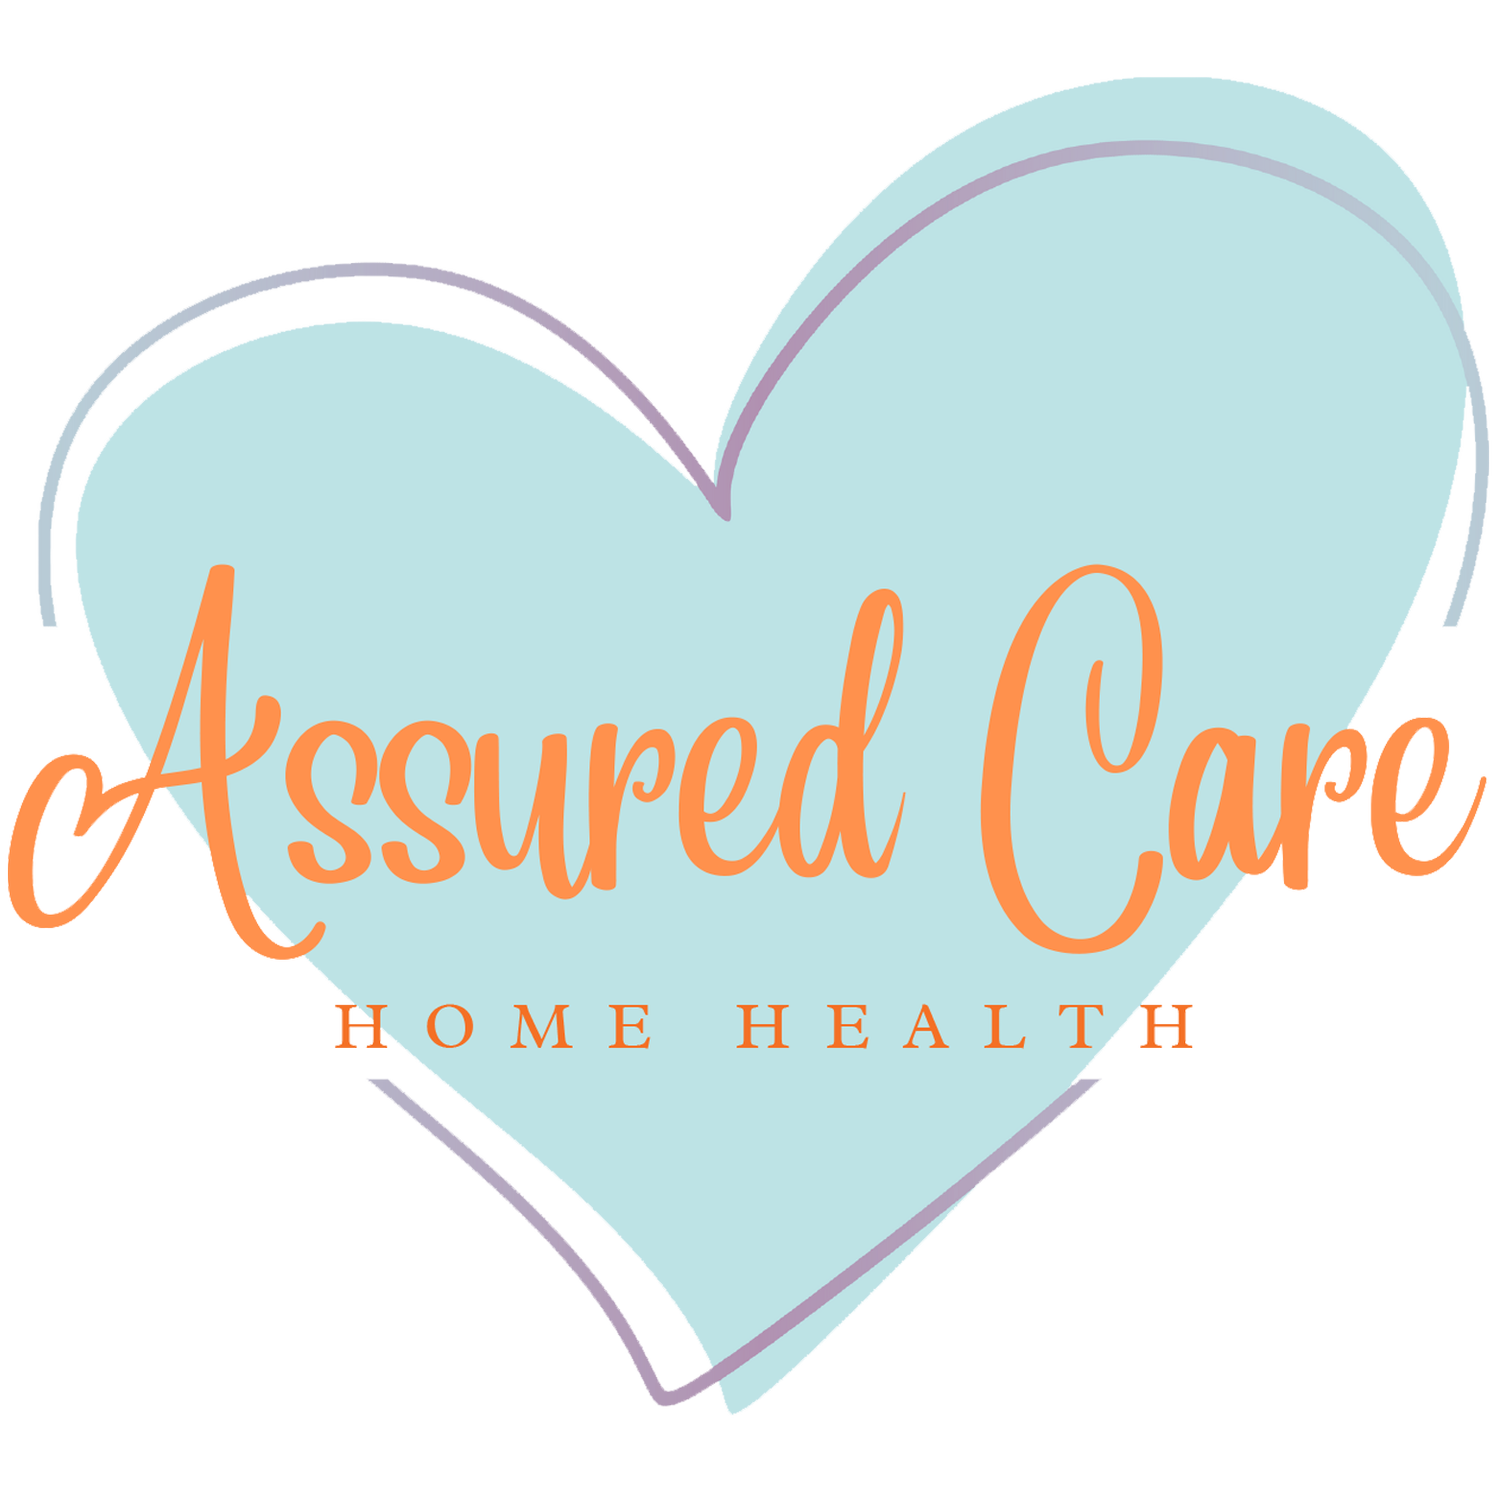 Assured Care Home Health